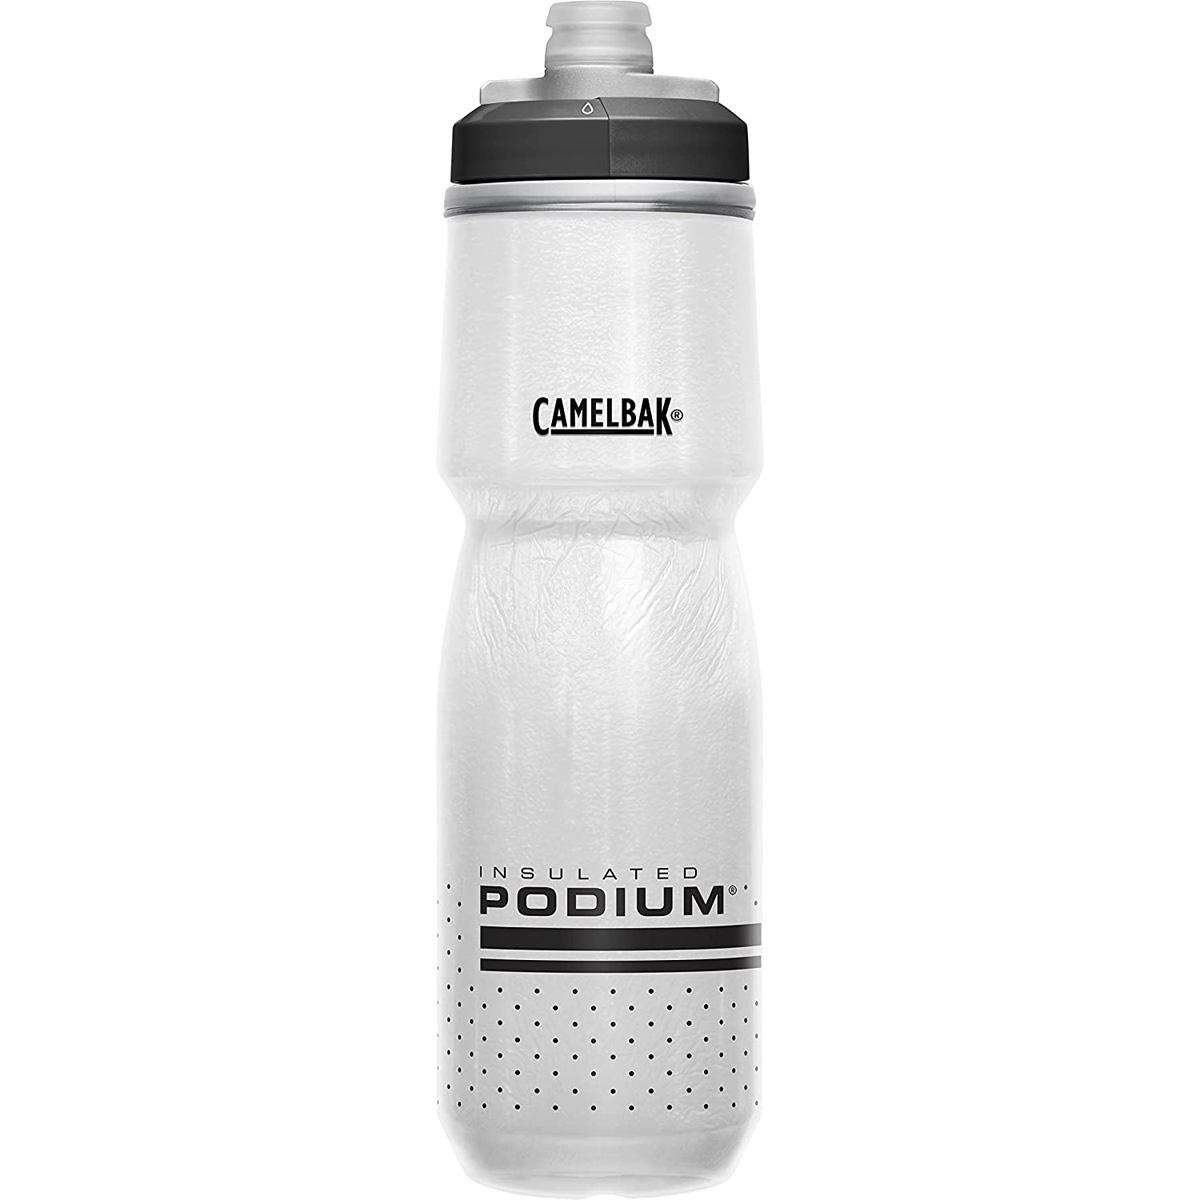 Camelback Podium Chill Insulated Bike Bottle for $10.71